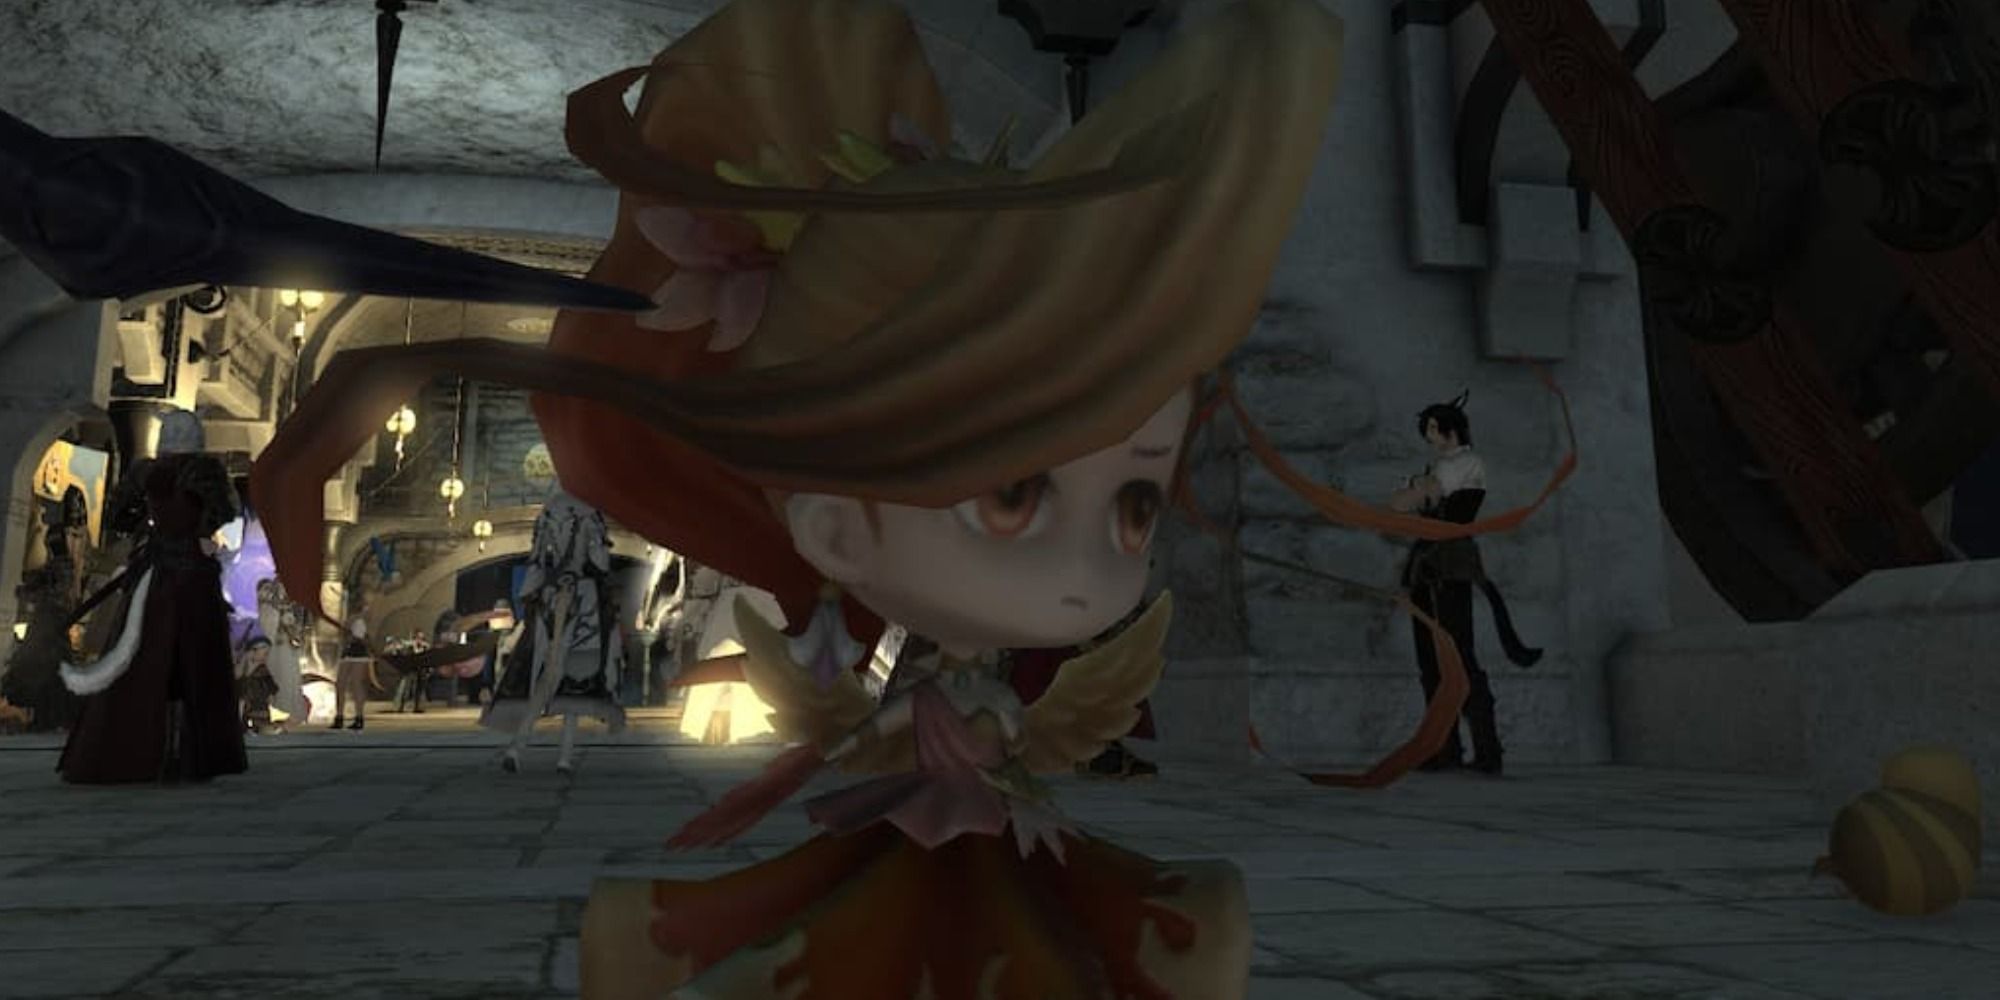 The Wind-up Azeyma Minion in Final Fantasy 14